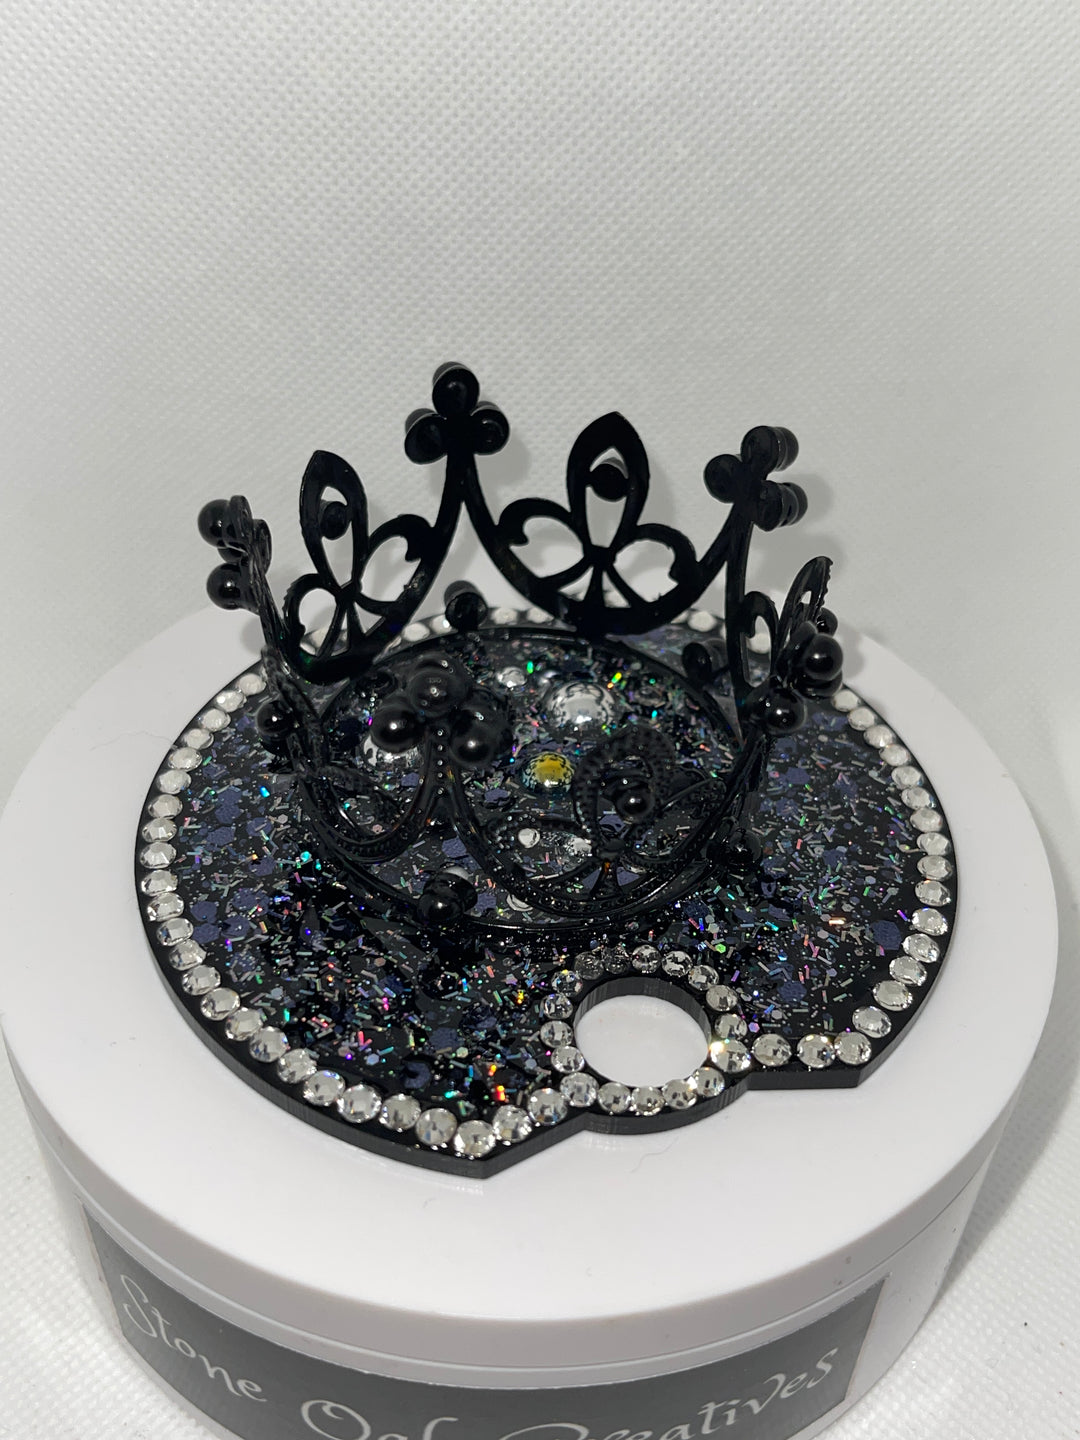 Bling Rhinestone Crown 40 oz Topper, Diva Topper, Queen Topper, Rhinestone Tumbler Lid 3D decorative tumbler lid attachment, unique gift